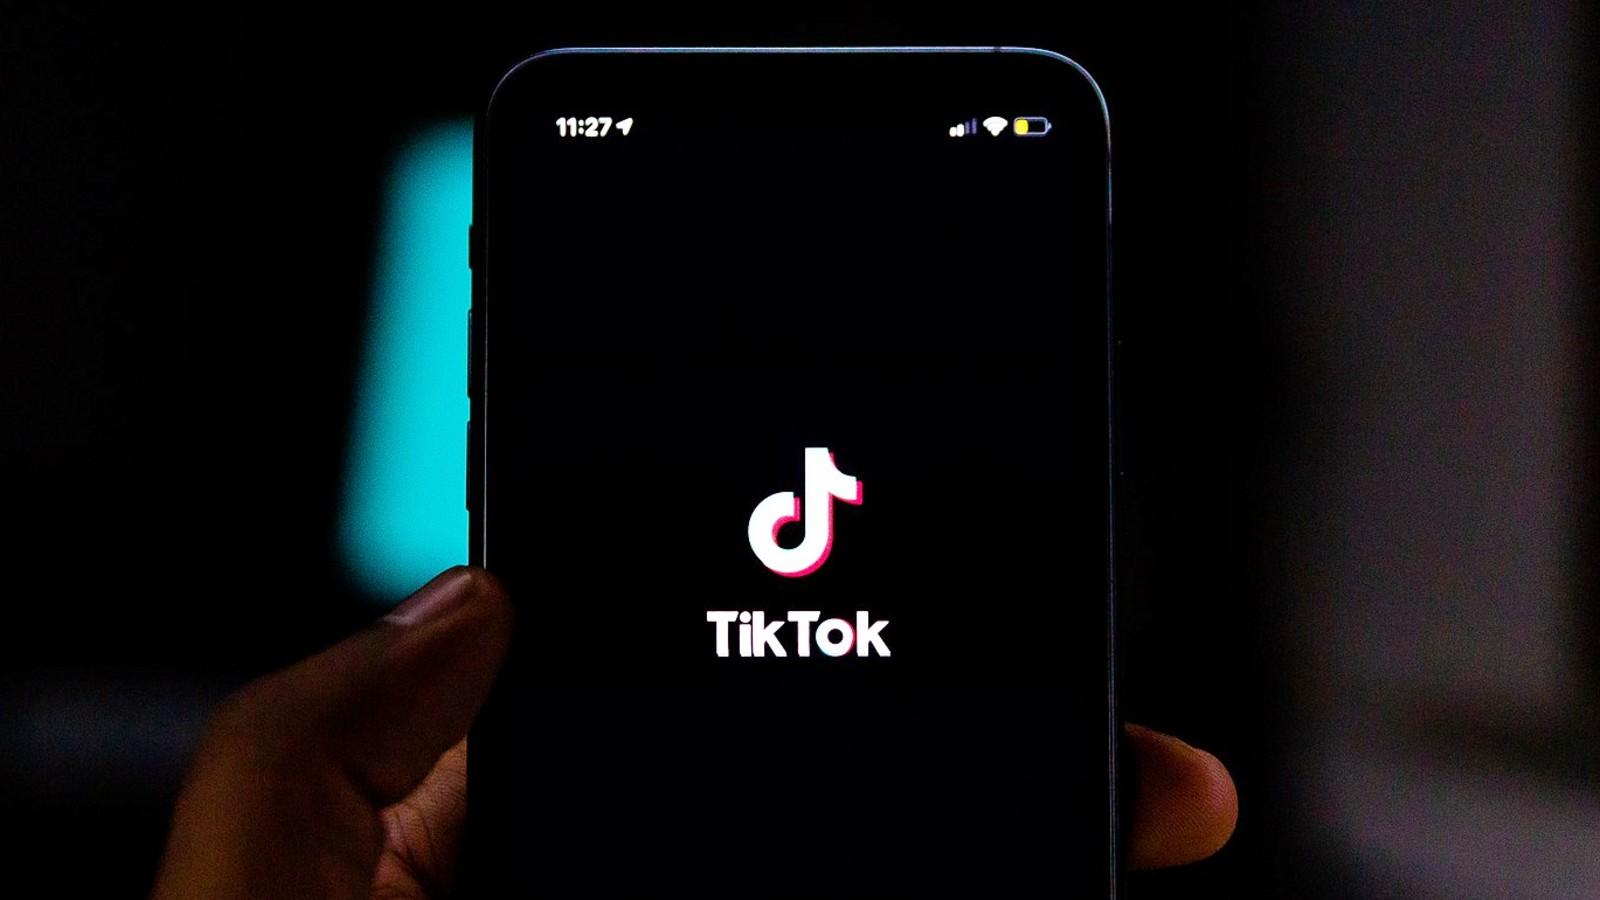 Phone with TikTok loading screen